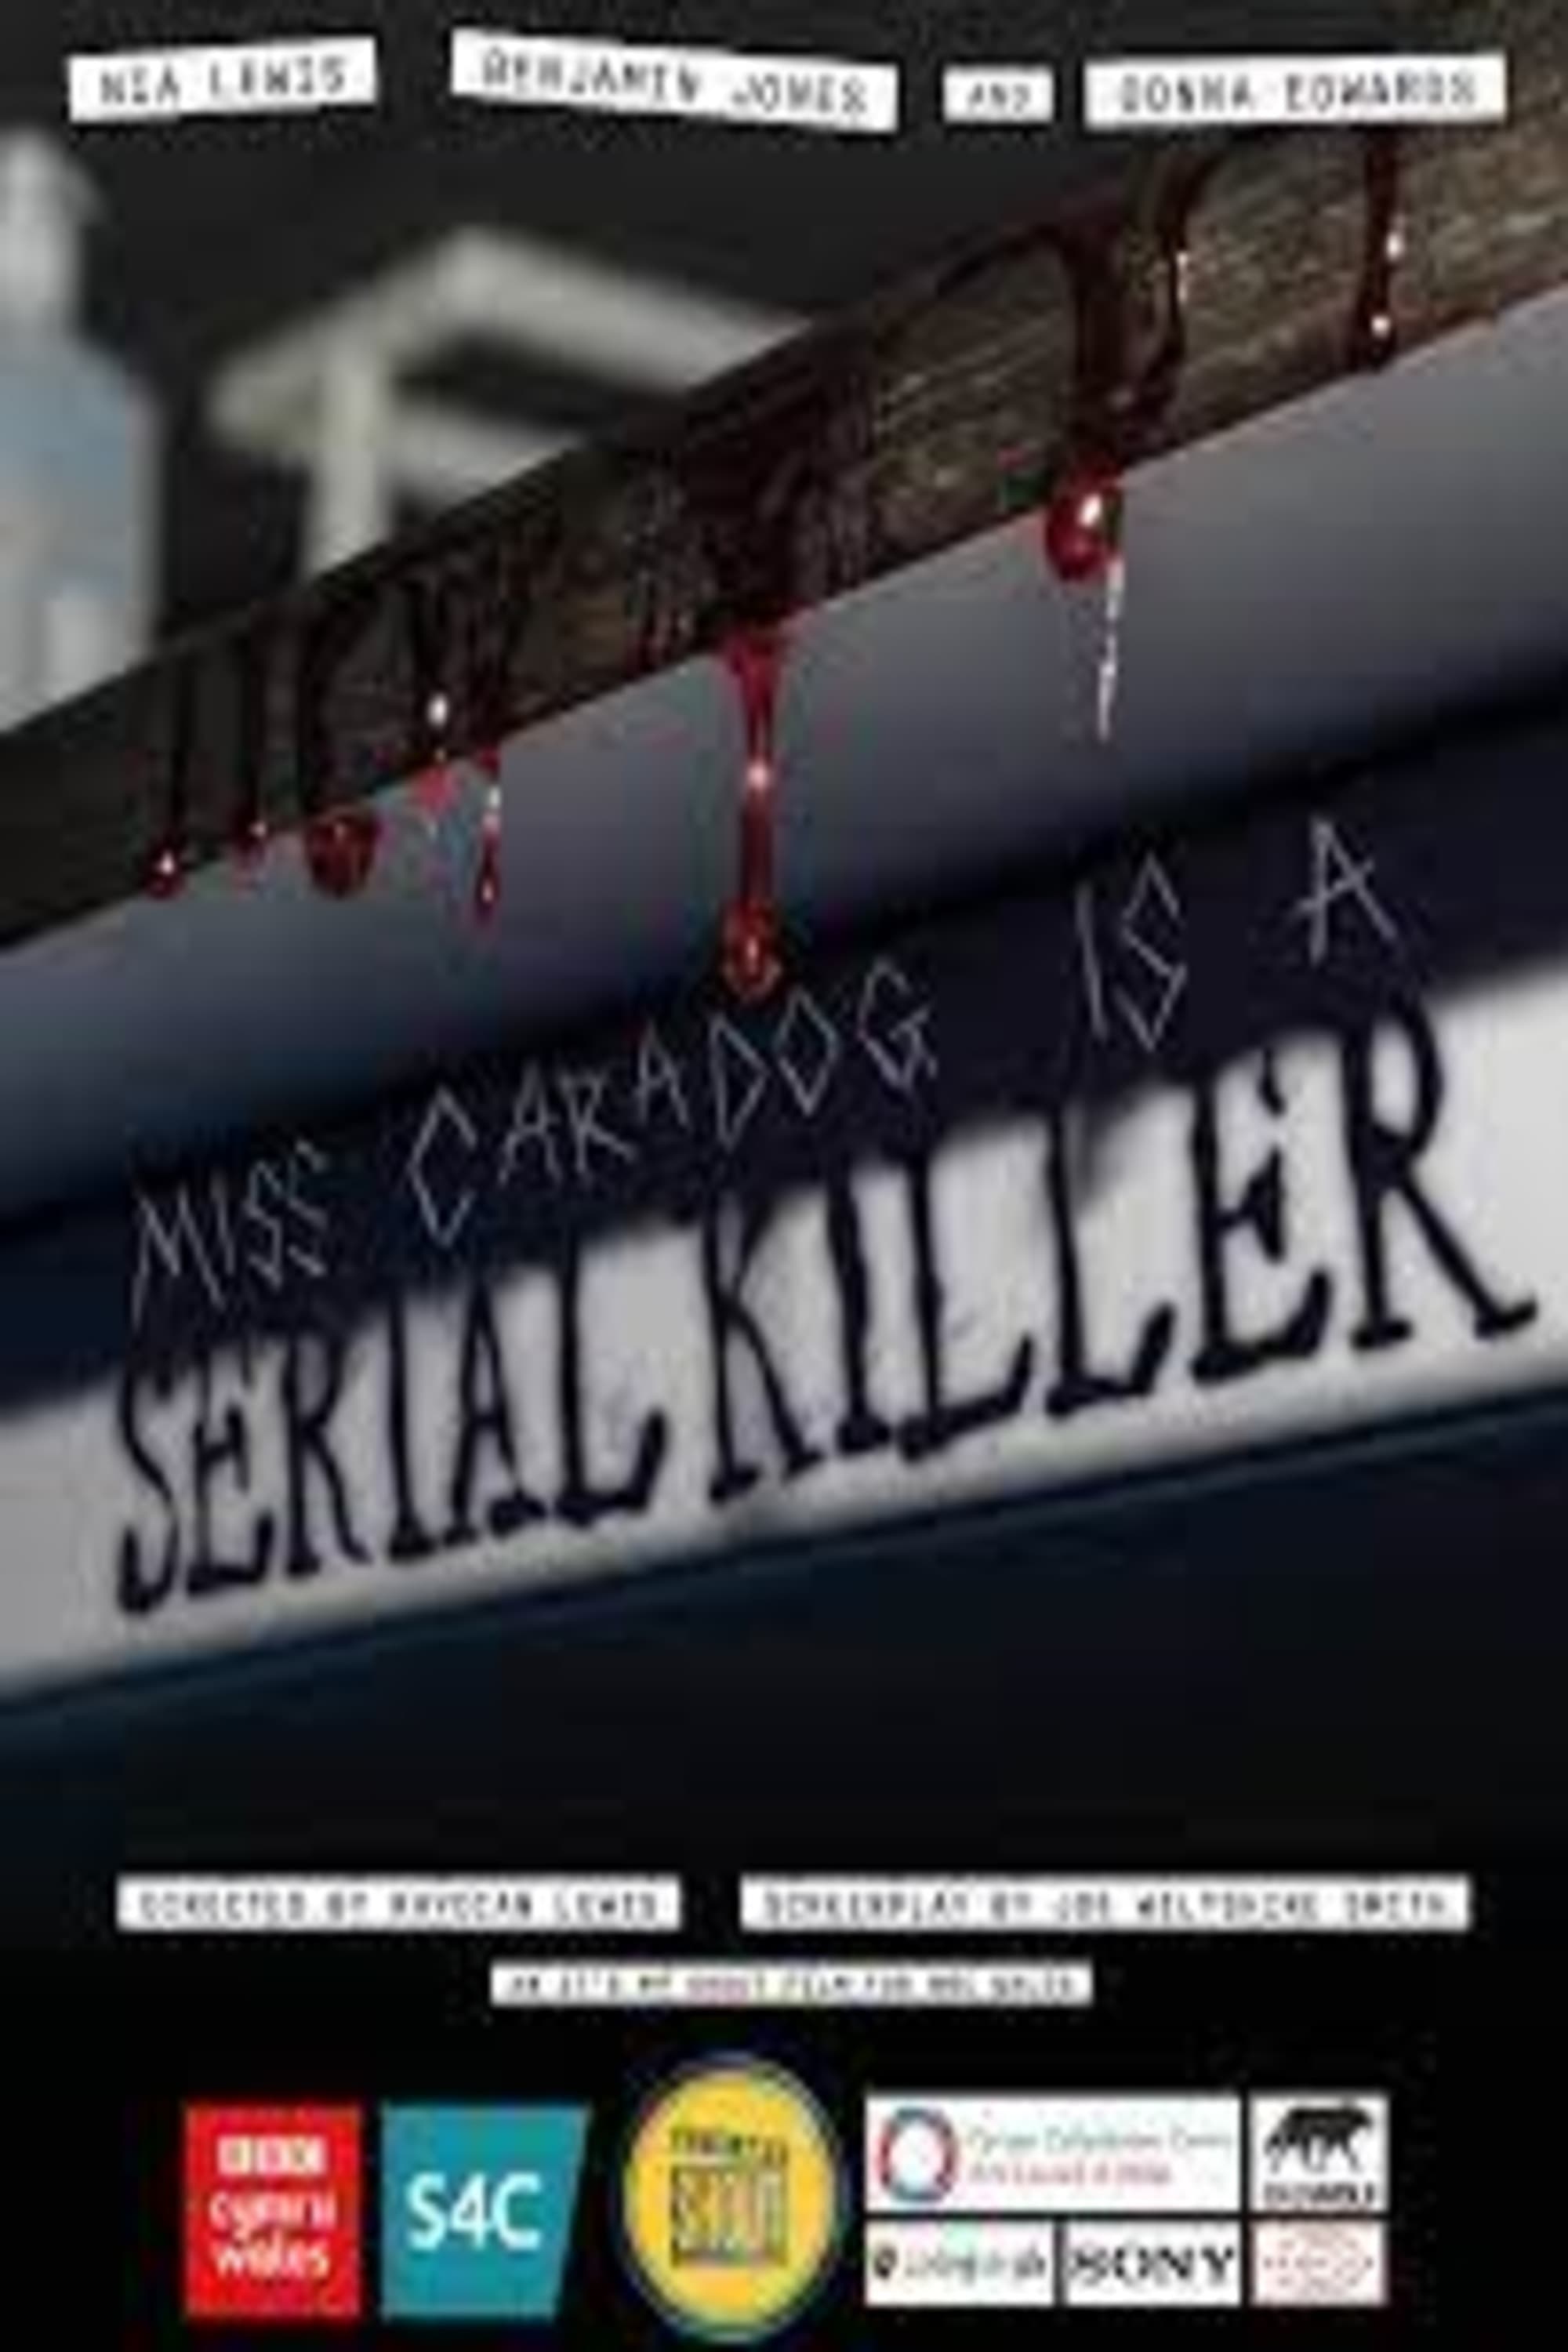 Miss Caradog Is A Serial Killer